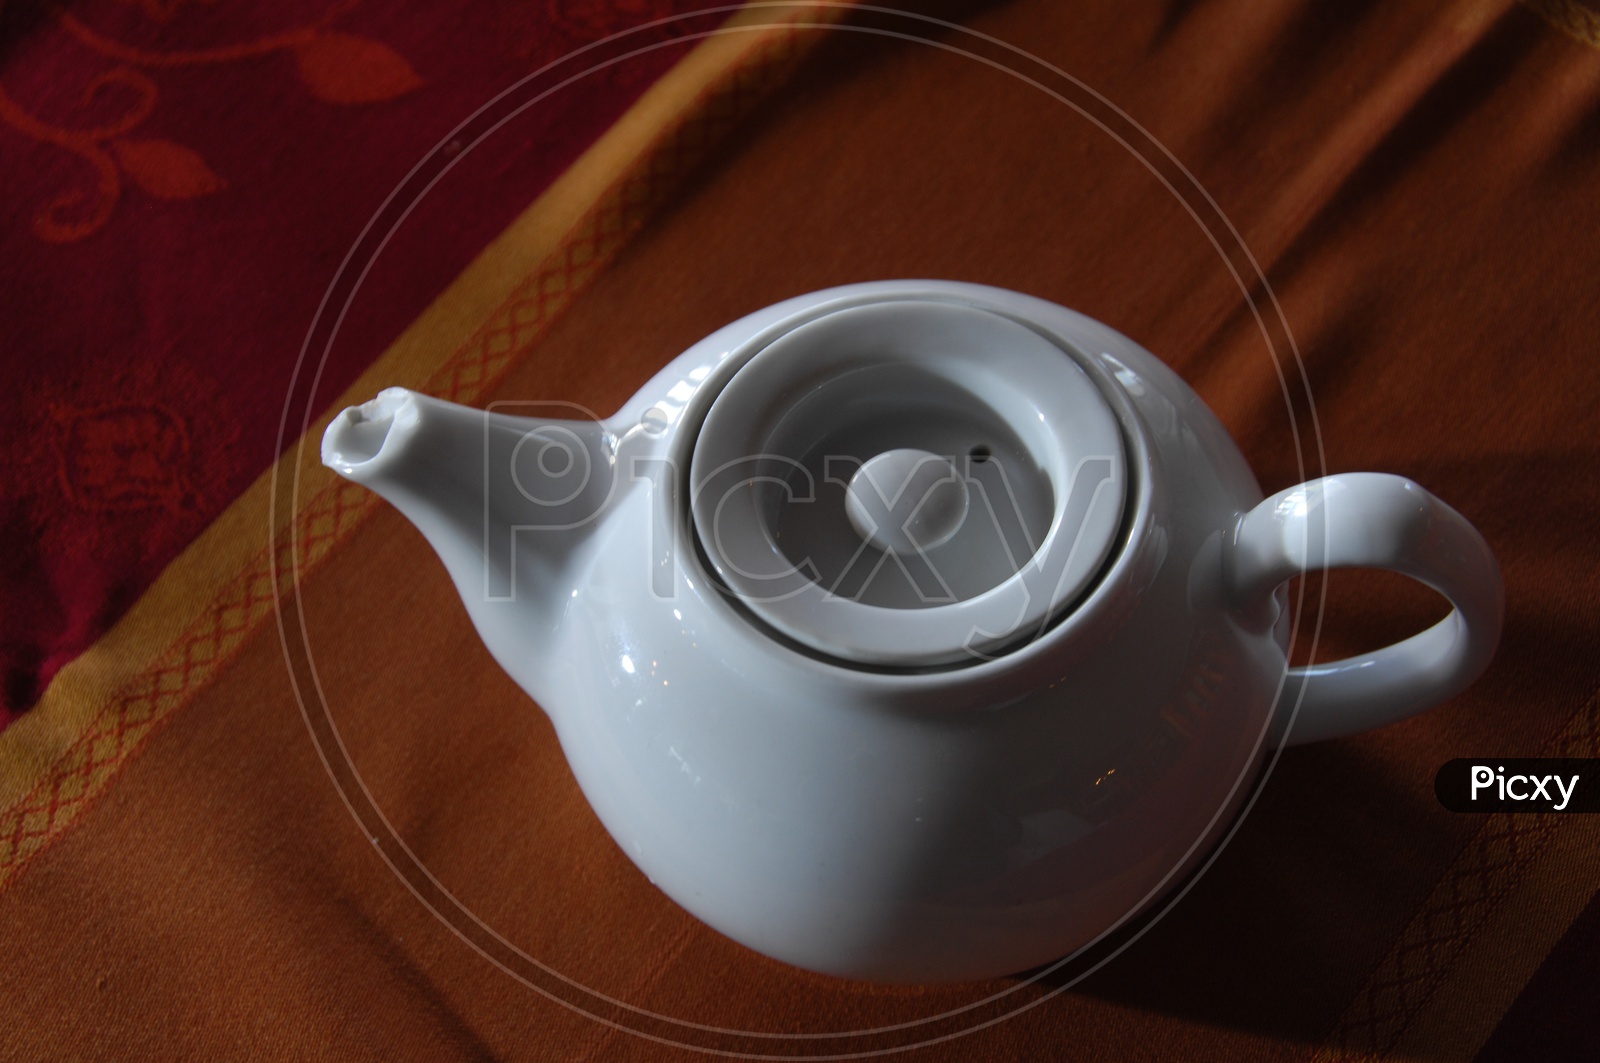 Tea Pot on a Table Closeup Shot